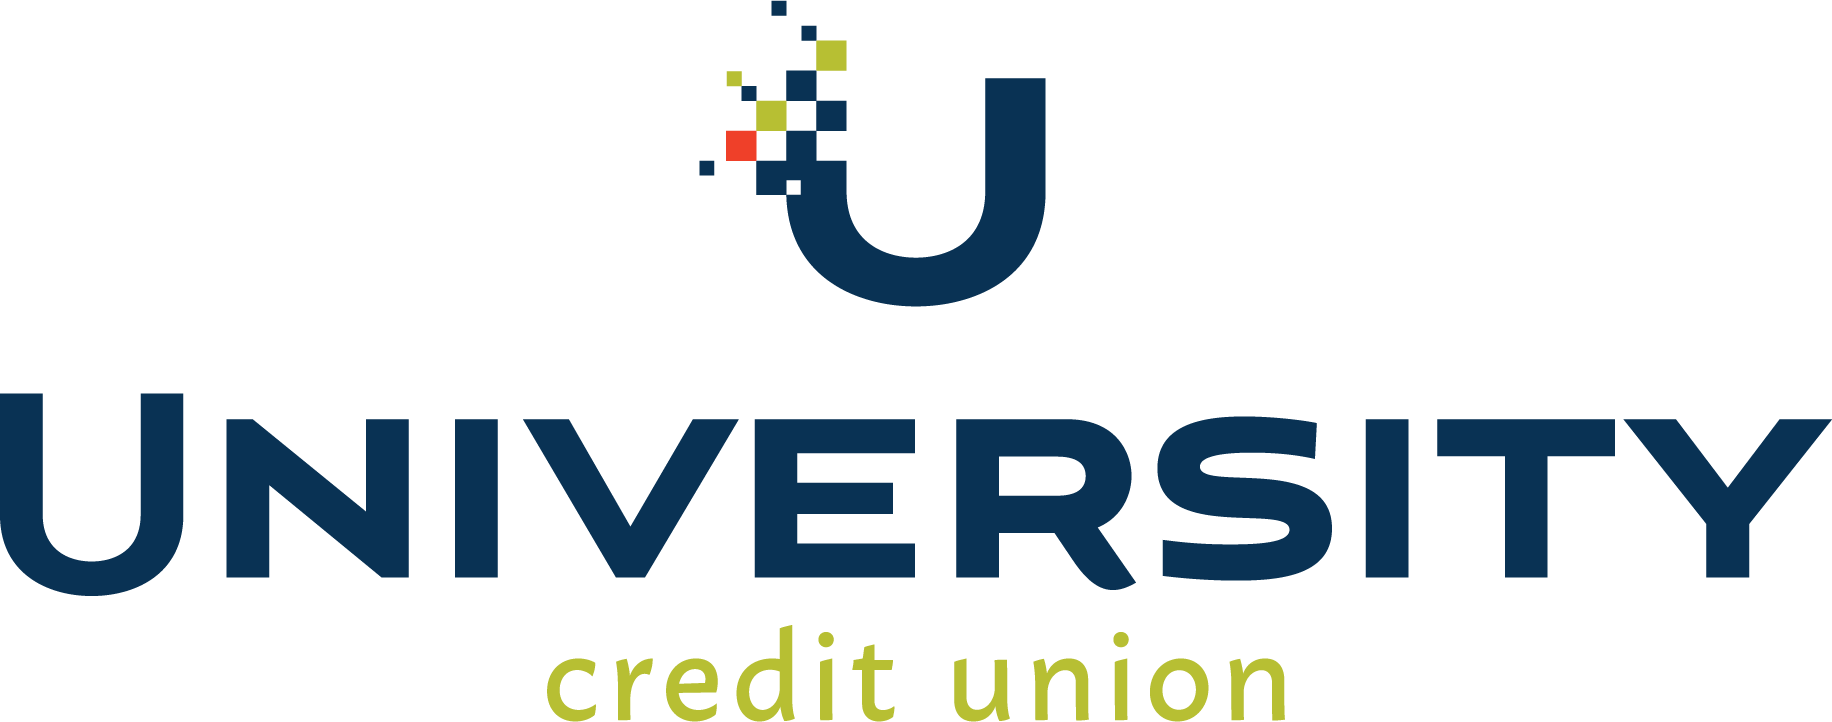 University Credit Union Logo